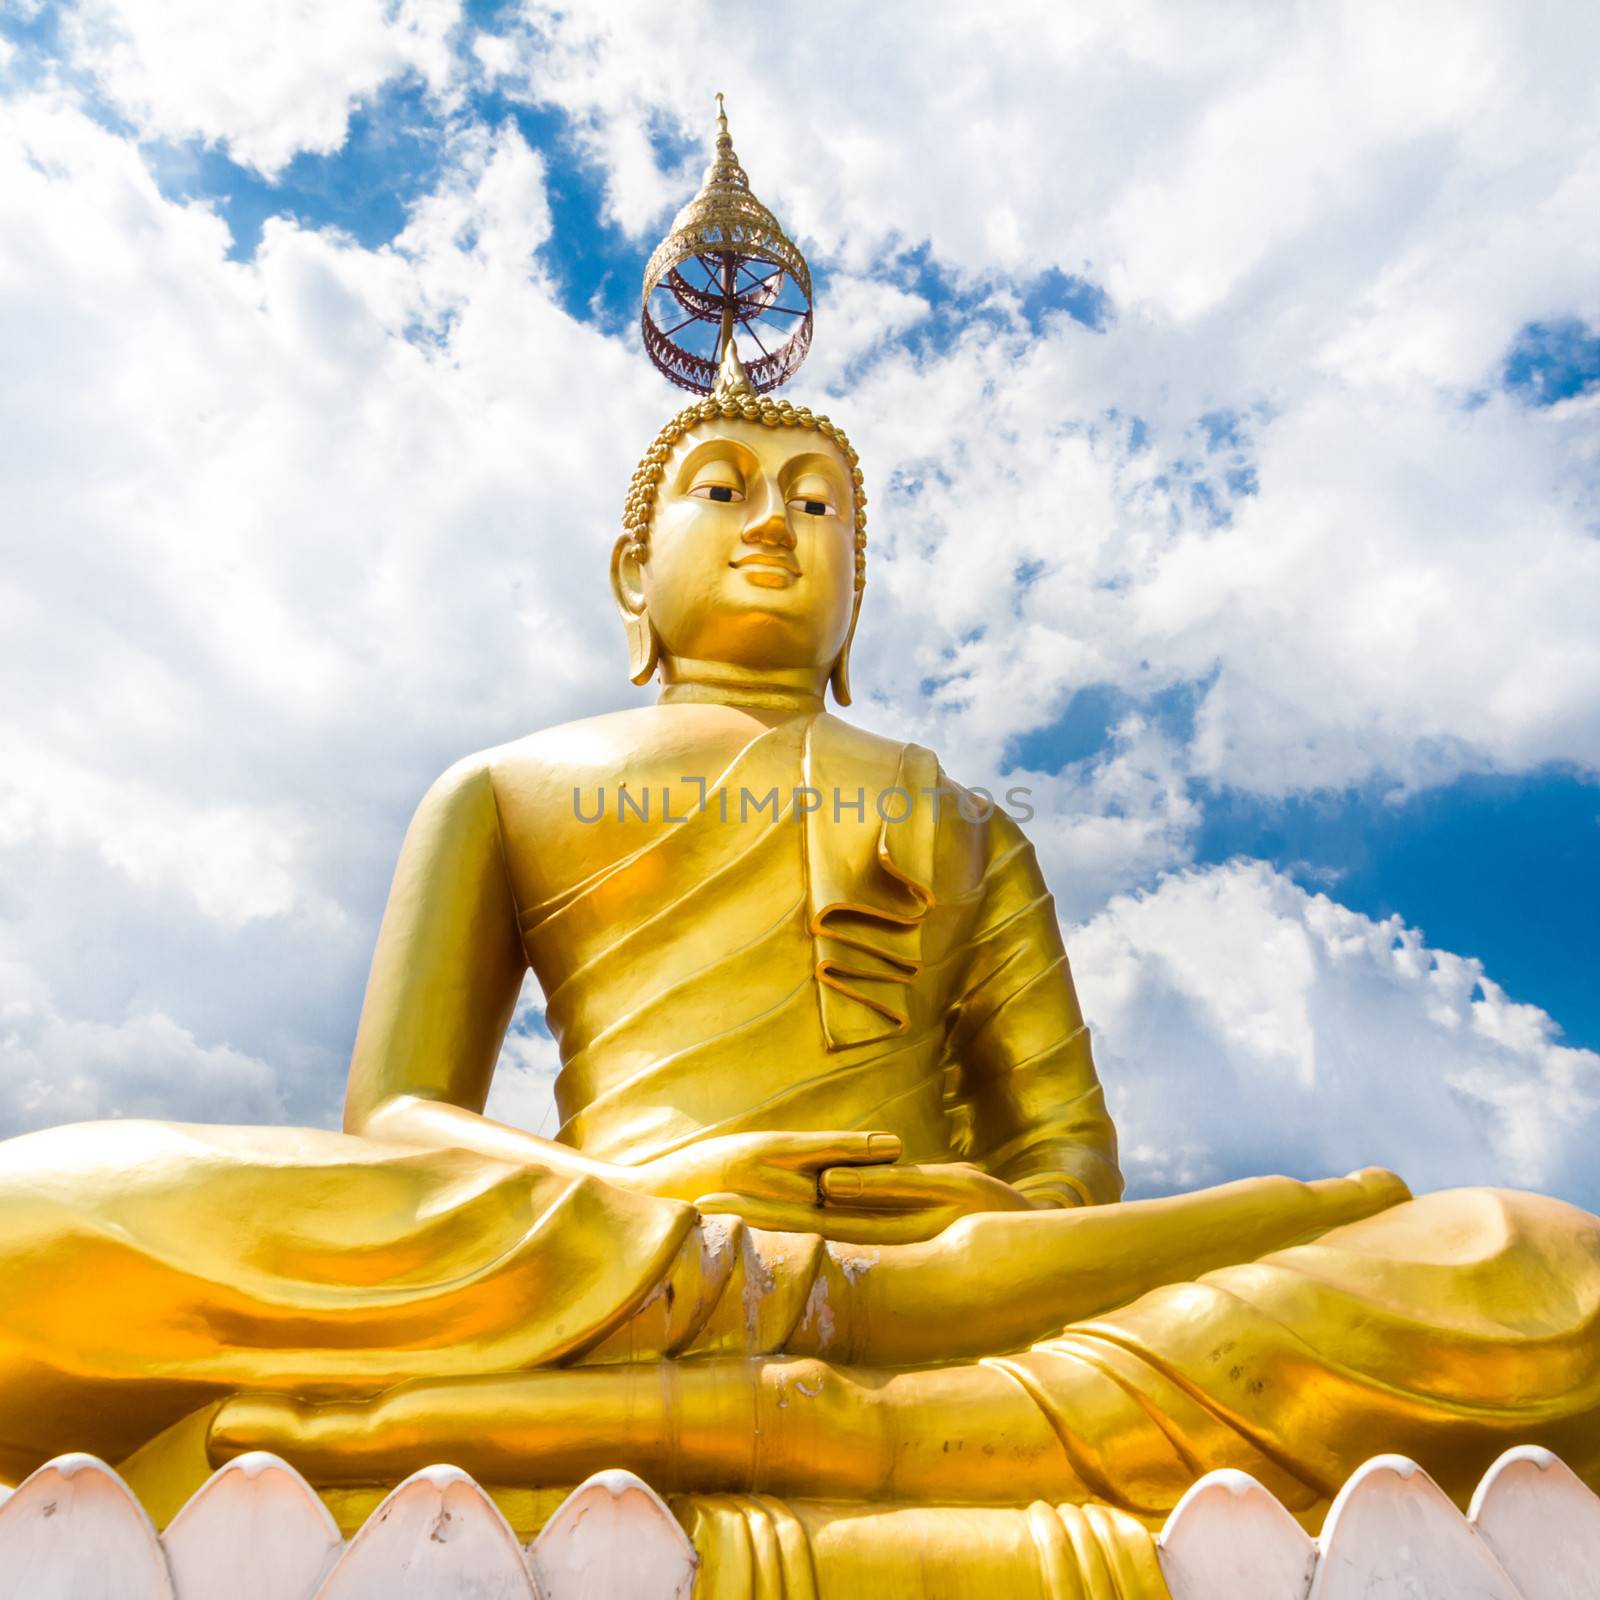 Buddha statue - Krabi Tiger Cave - Wat Tham Sua, Krabi, Thailand by kasto